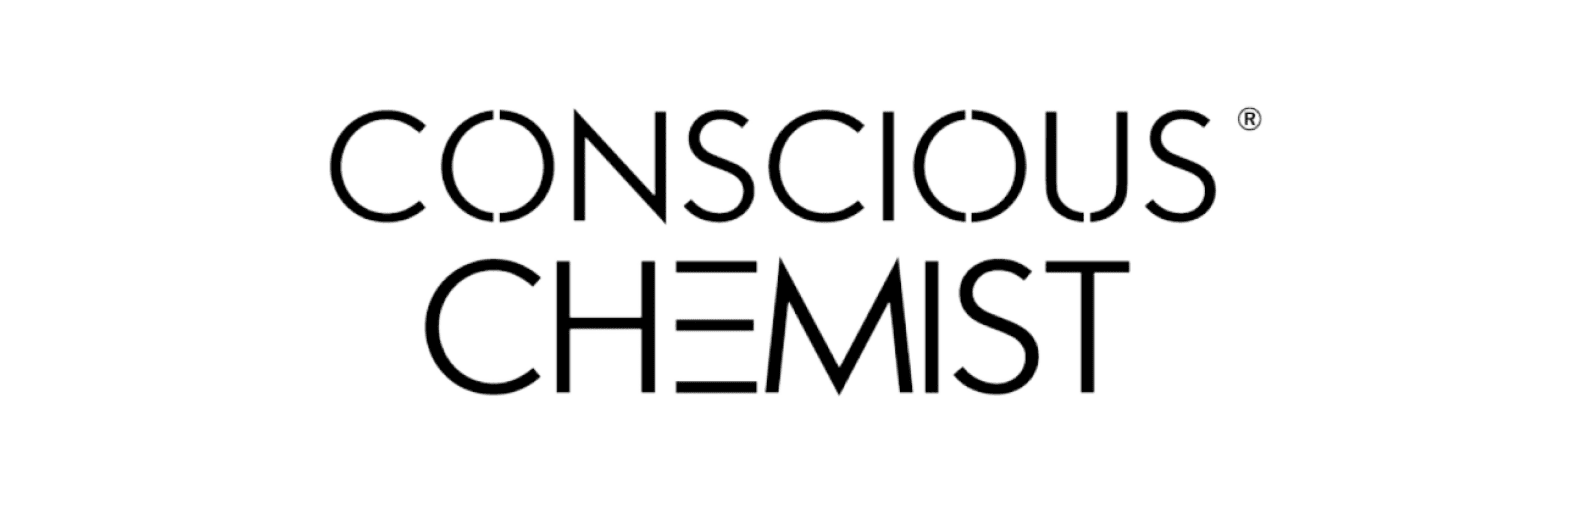 Conscious chemist